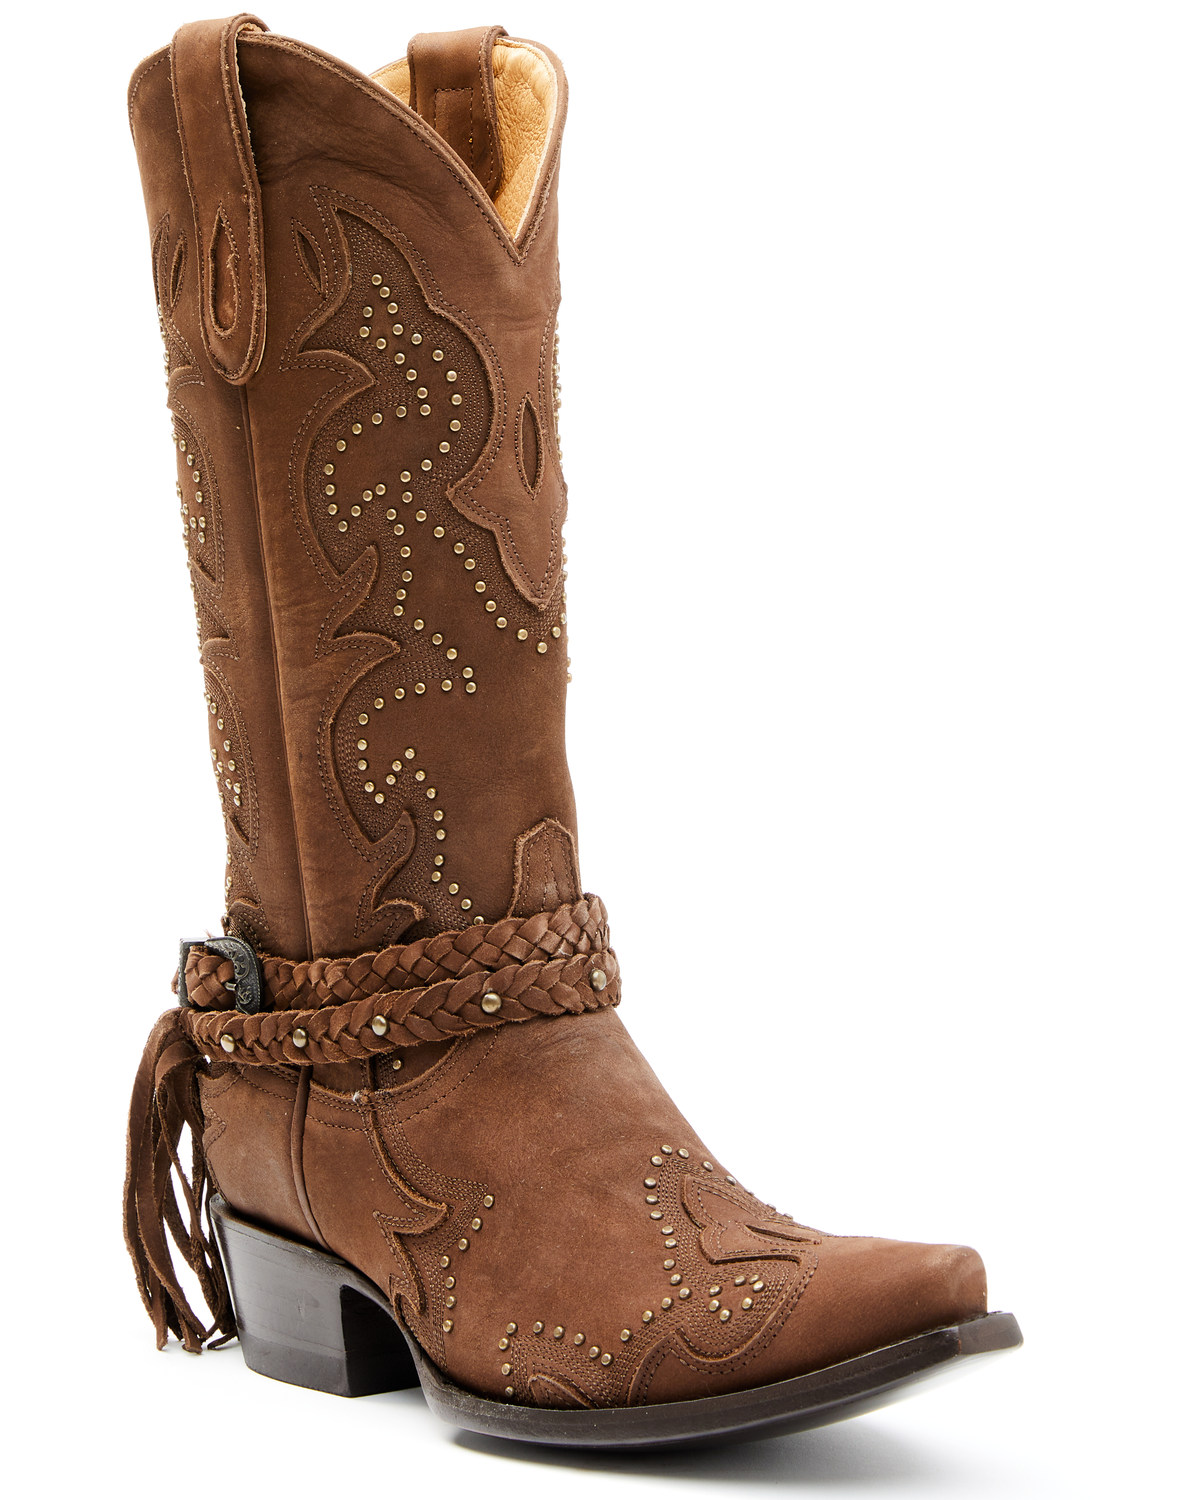 Idyllwind Women's Barfly Brown Western Boots - Snip Toe